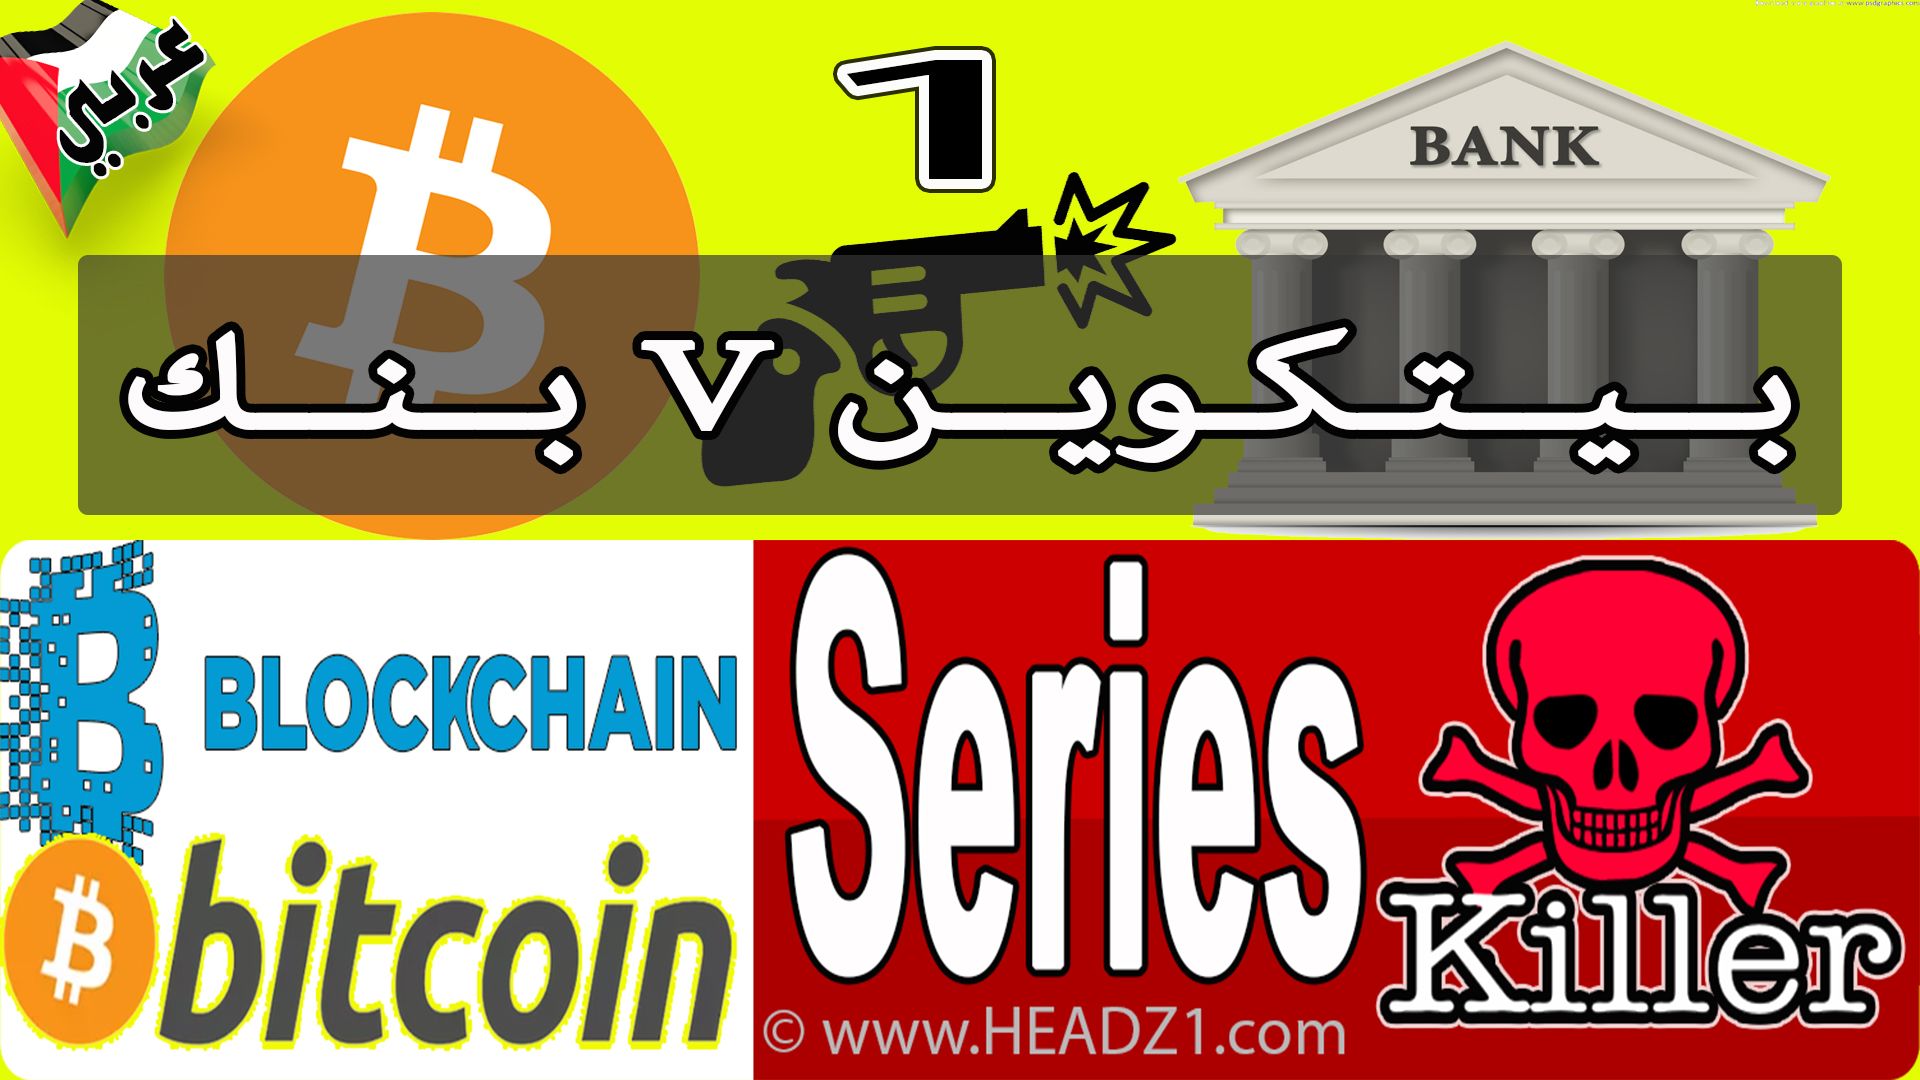 Ar Bitcoin - Blockchain Series Killer 01 .jpg